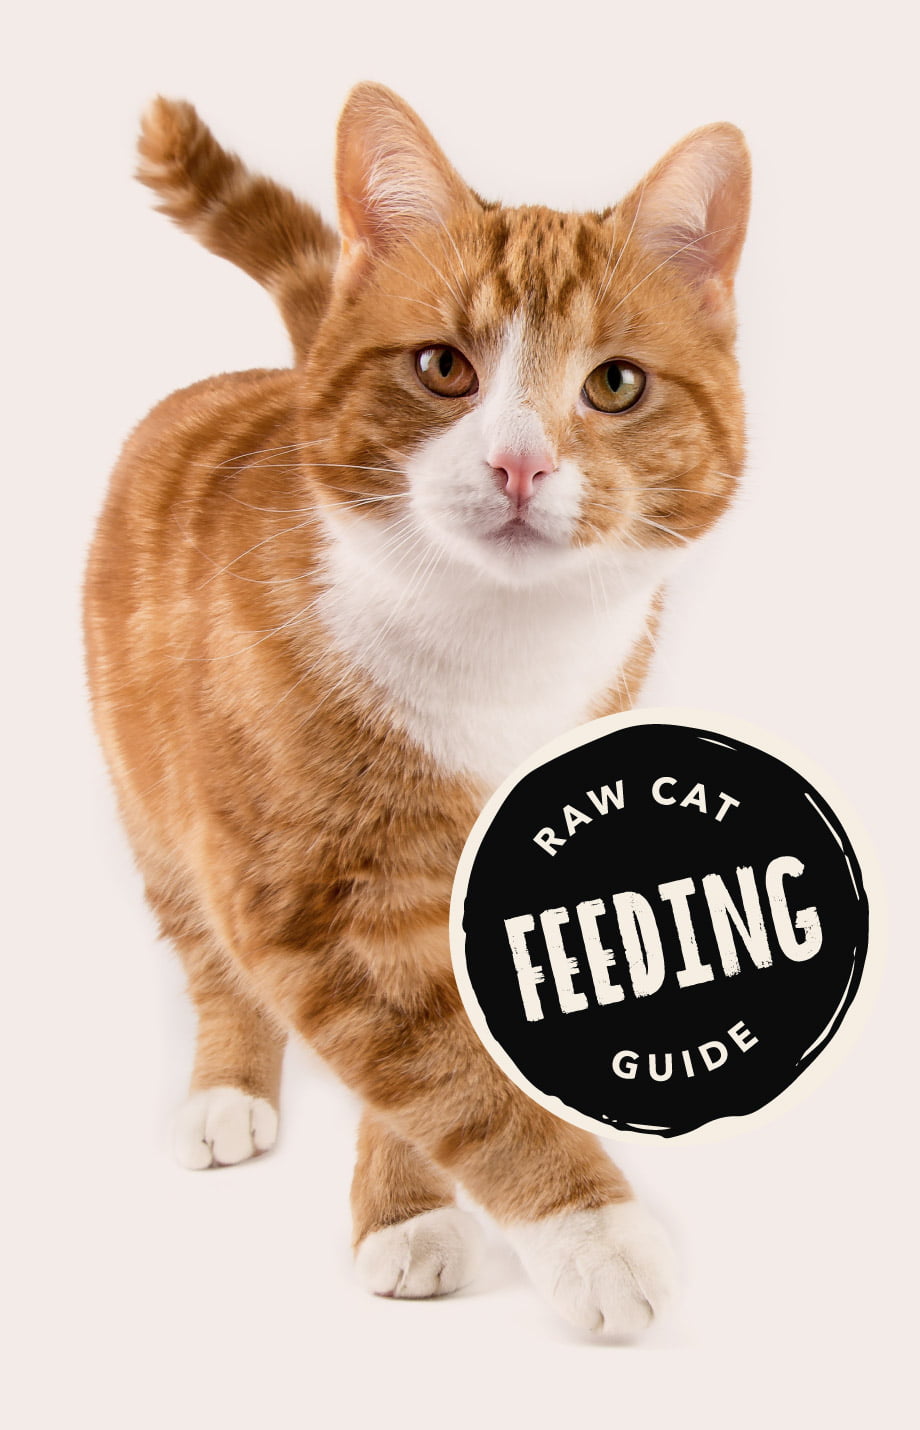 Cat feeding guide